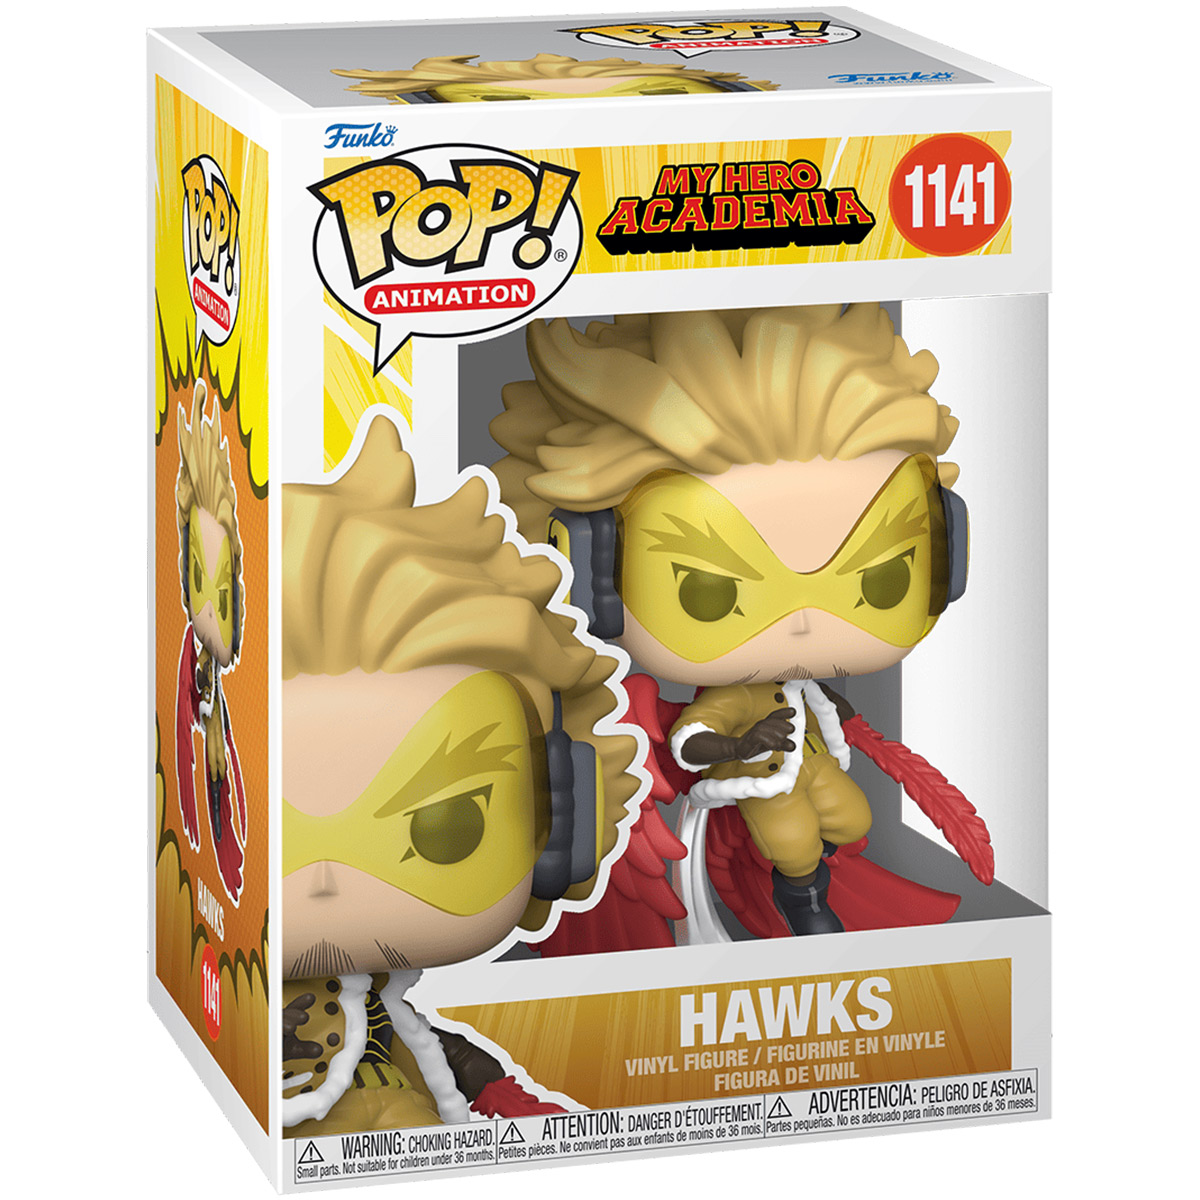 Hawks #1141 - My Hero Academia - Funko Pop! Animation